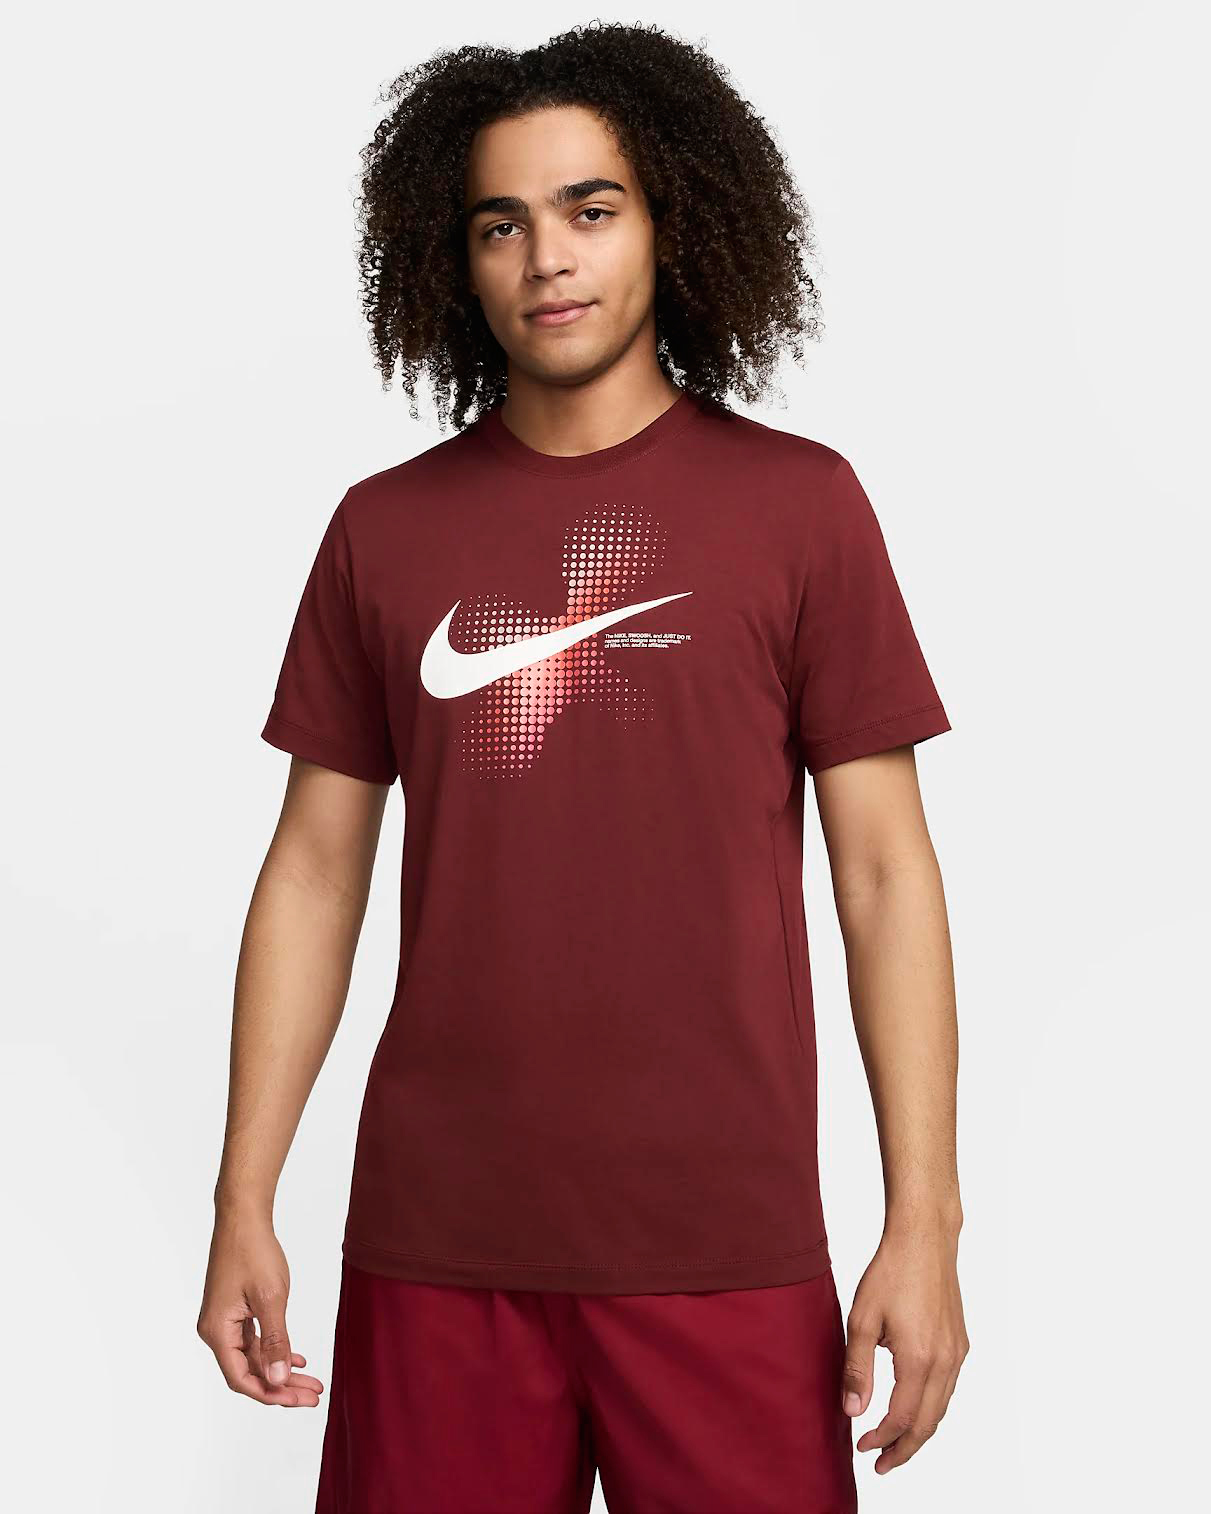 Nike-Sportswear-T-Shirt-Dark-Team-Red